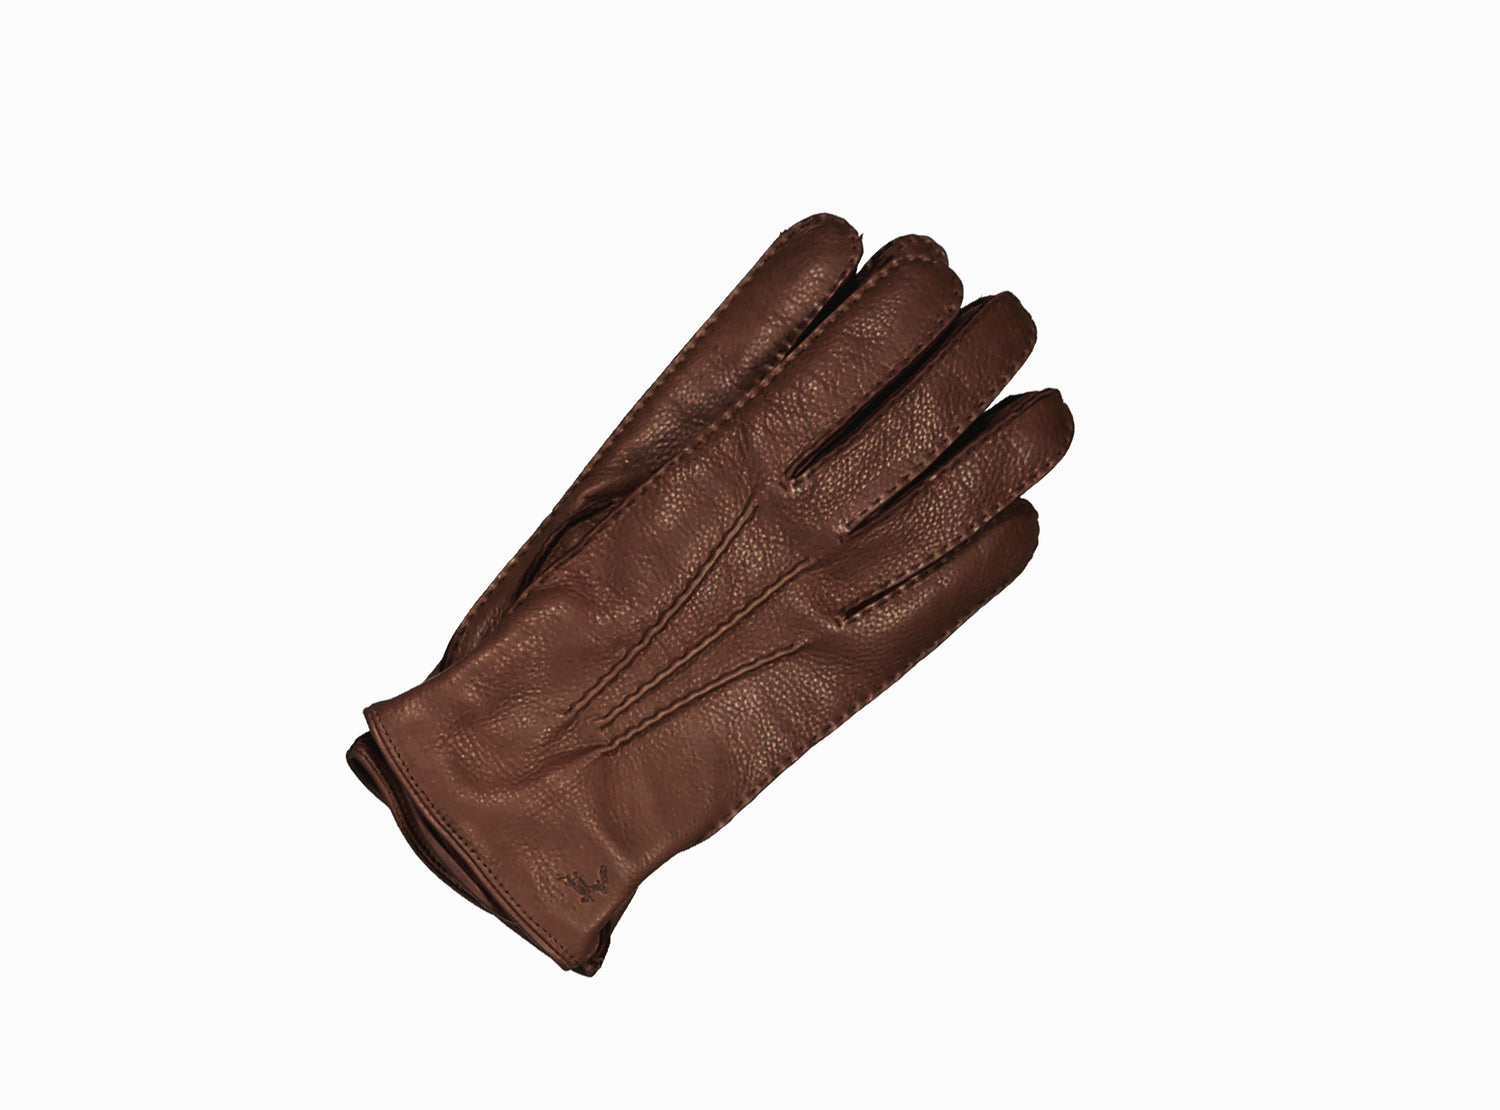 Sauso for Turo Deer Nappa Gloves in Dark Brown (7856805773534)